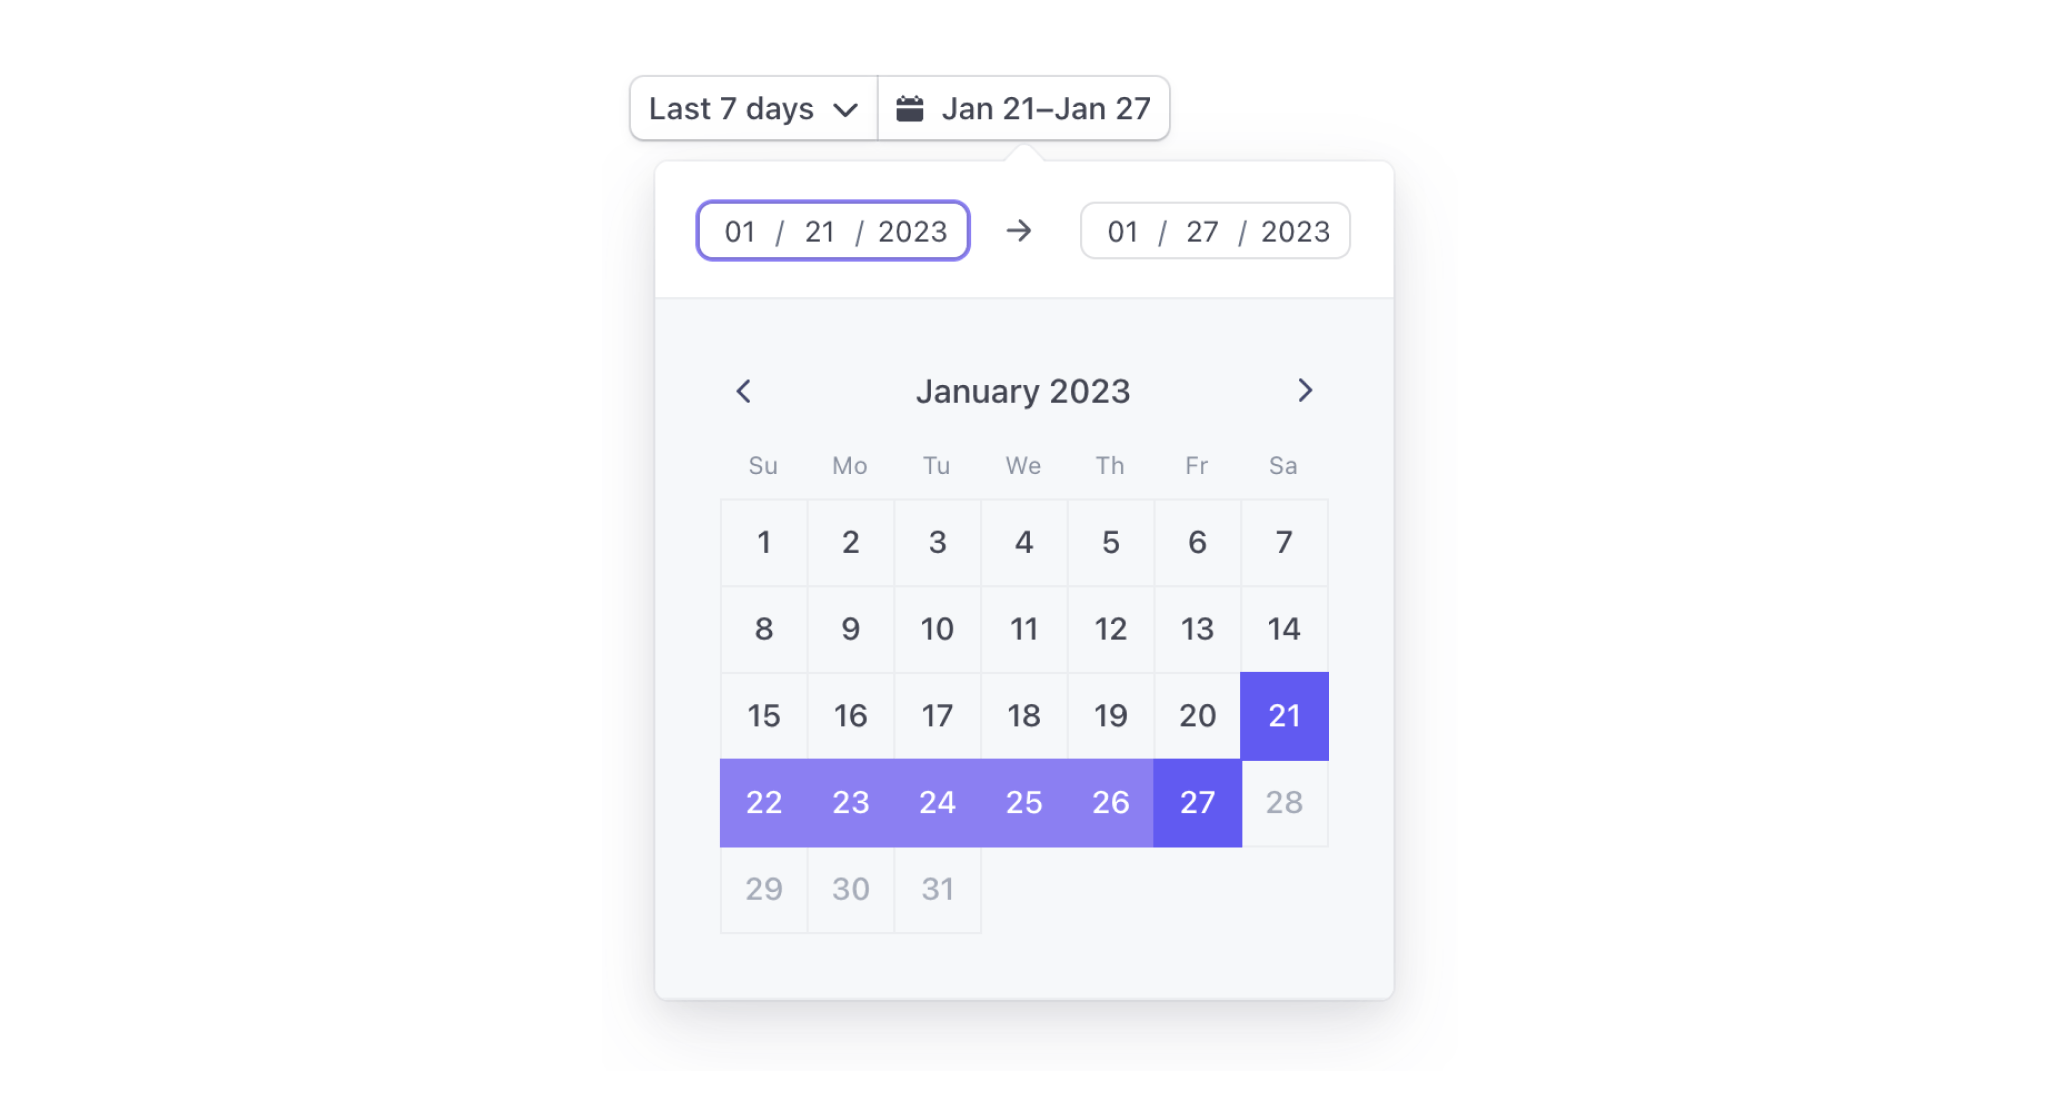 A full date picker, including a popover calendar